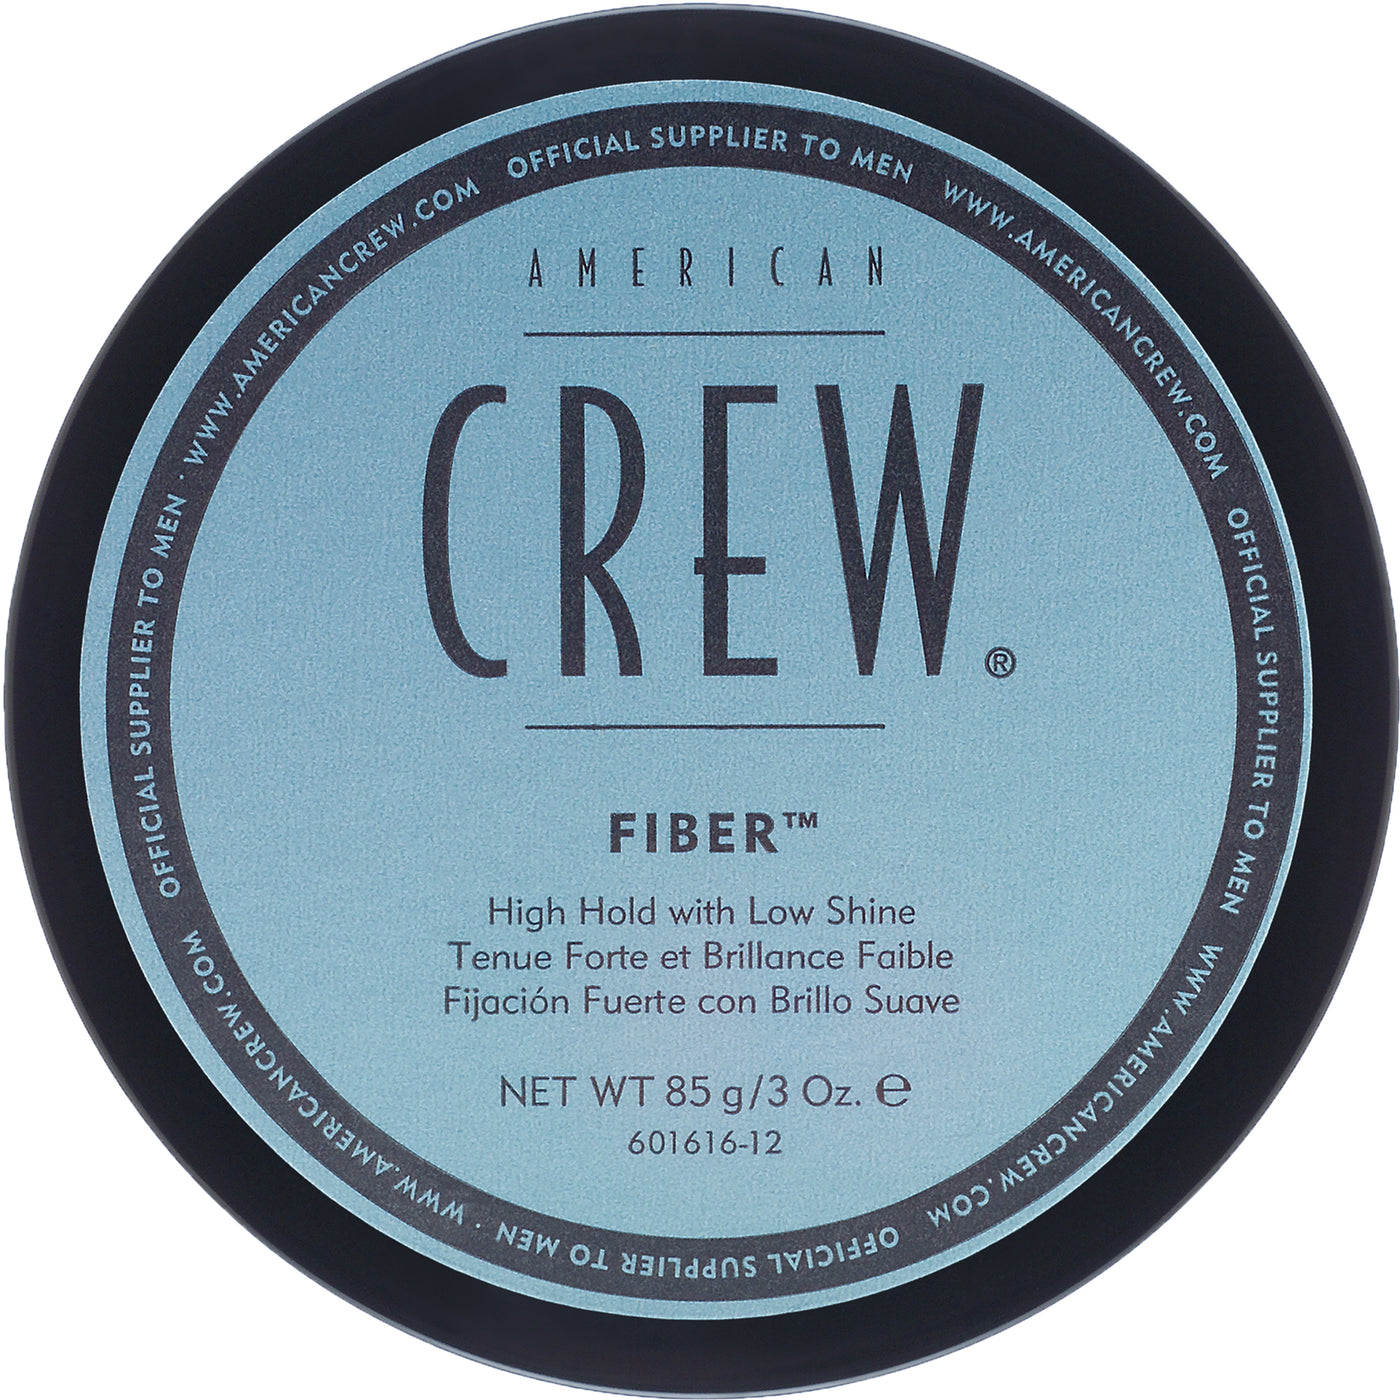 American Crew Fiber (85g)